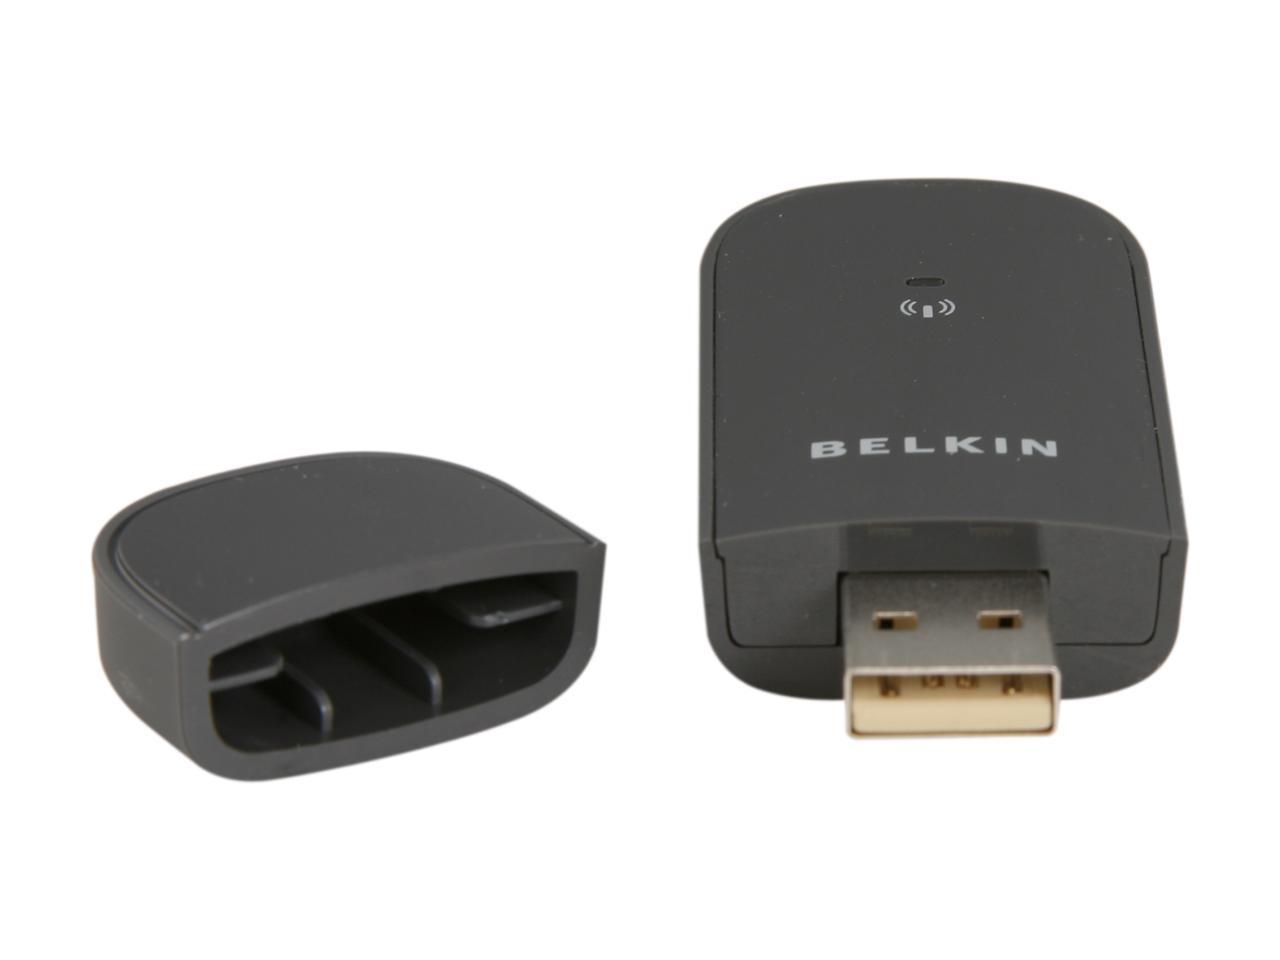 belkin wireless g usb network adapter driver vista